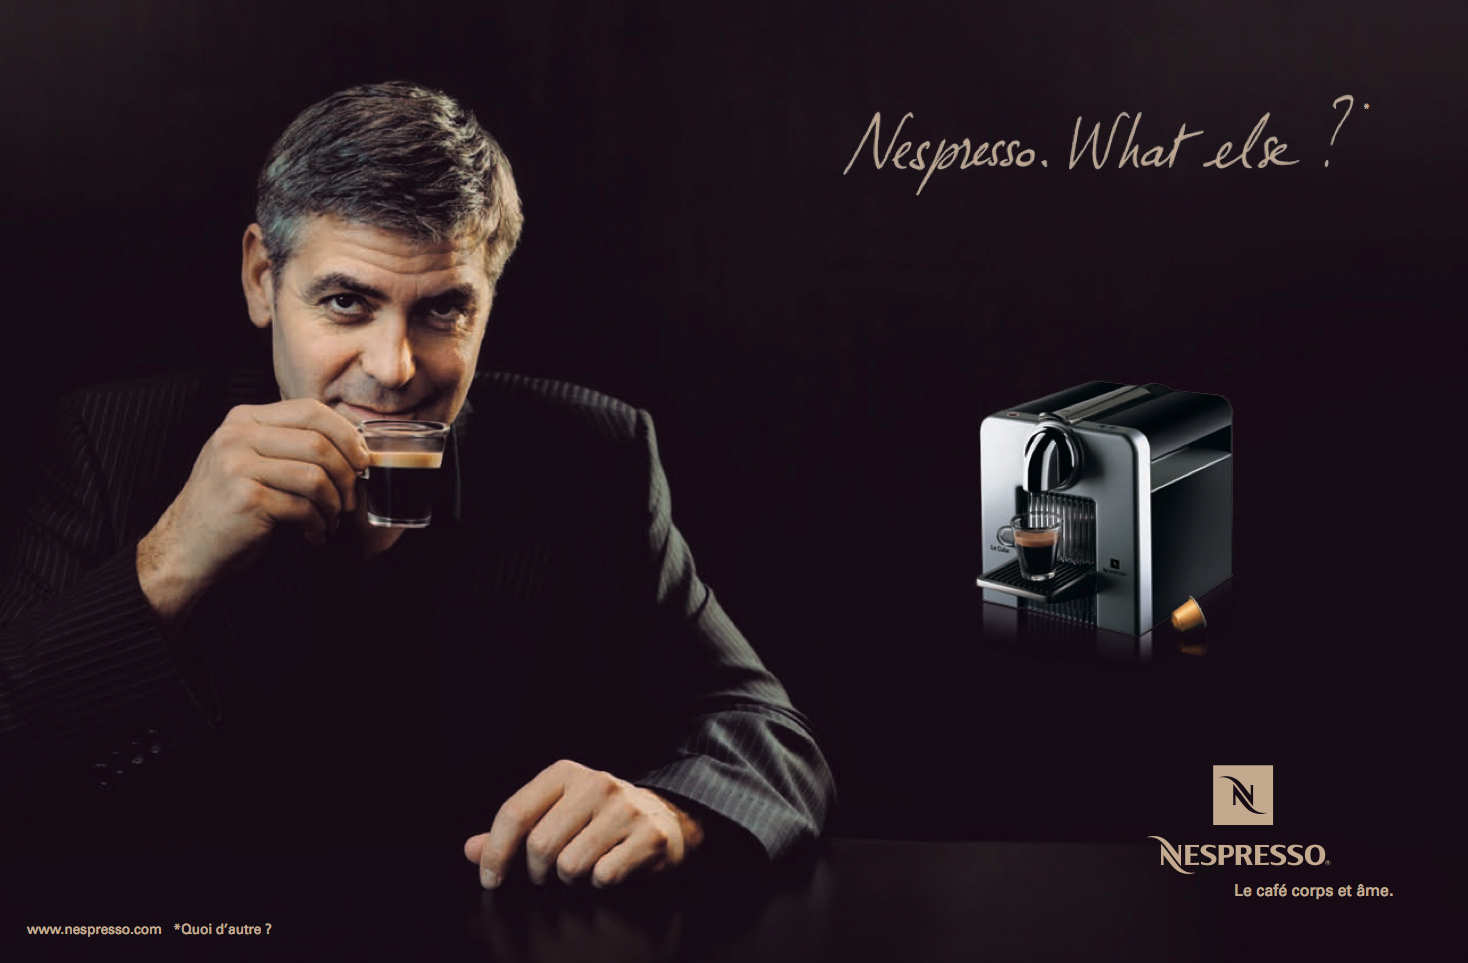 Nuovo spot Nespresso con George Clooney. Con lui una misteriosa femme fatale